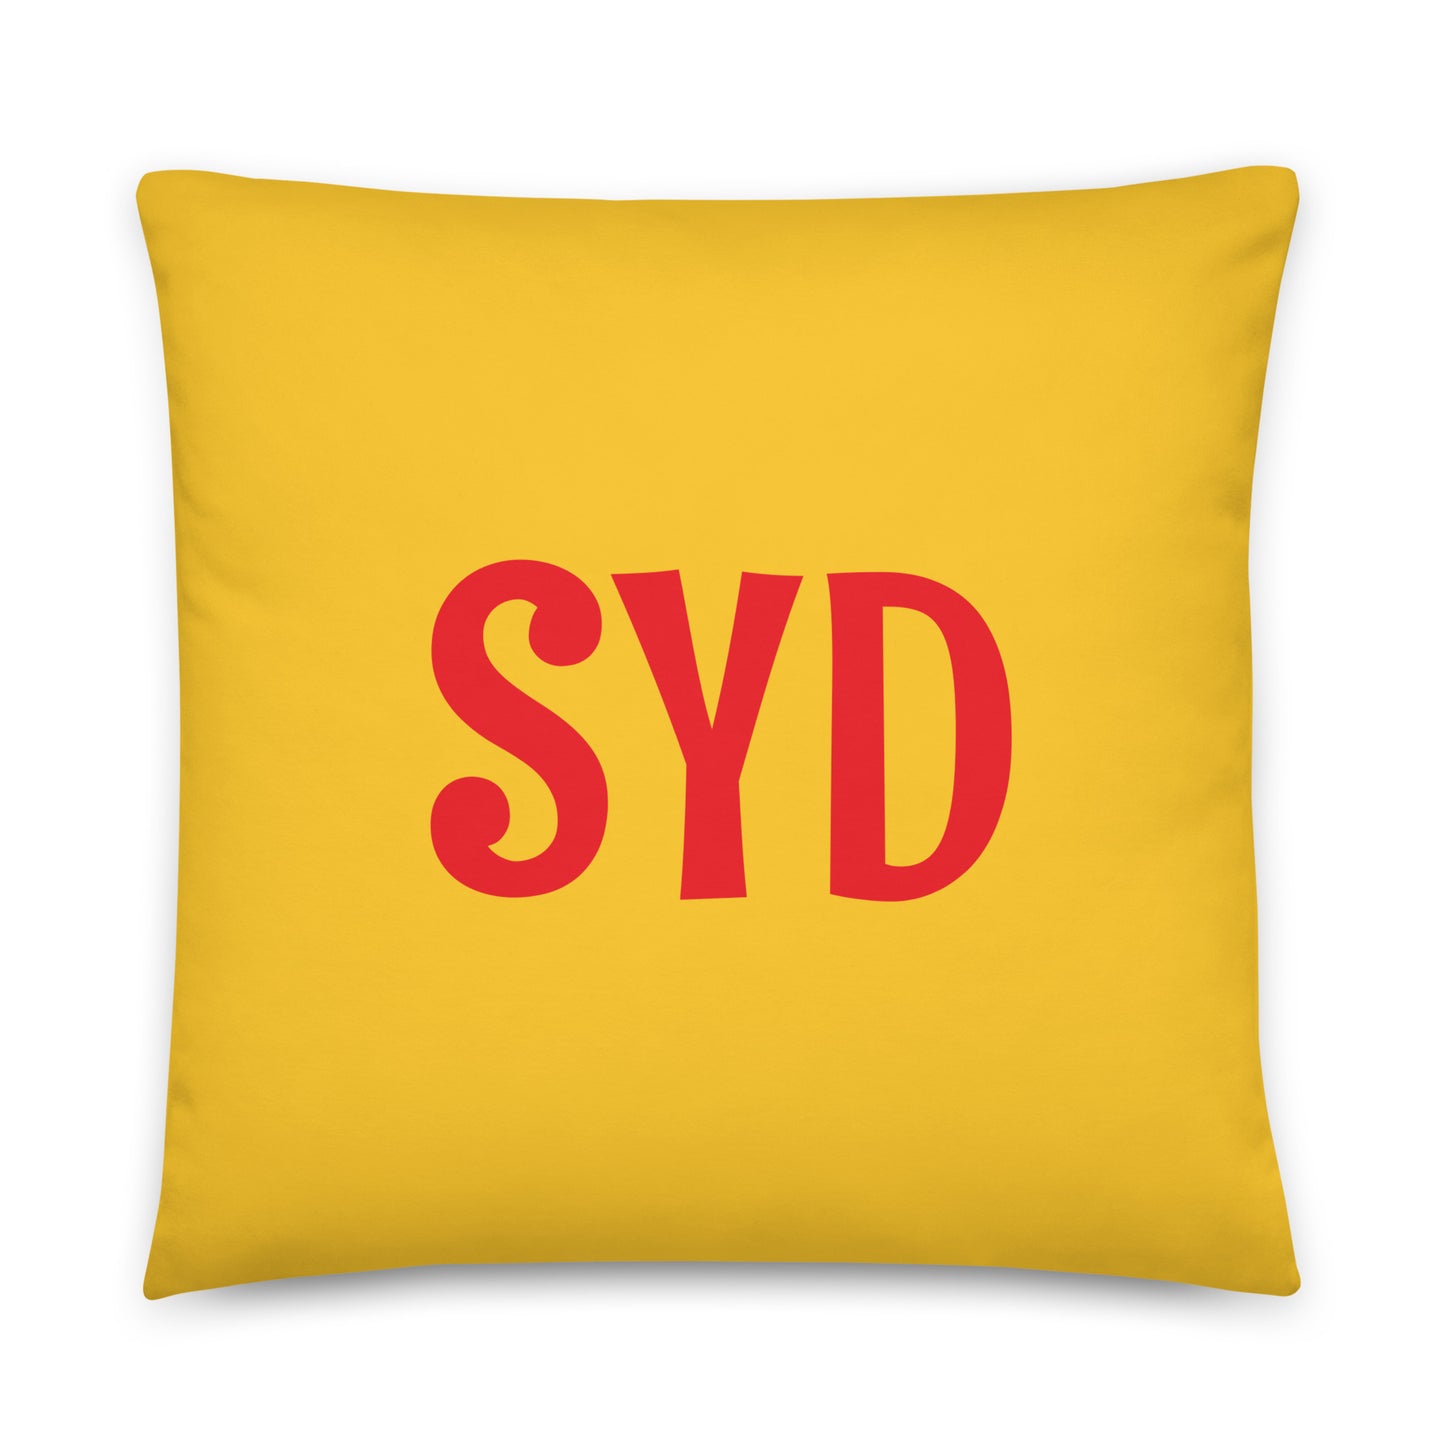 Rainbow Throw Pillow • SYD Sydney • YHM Designs - Image 01